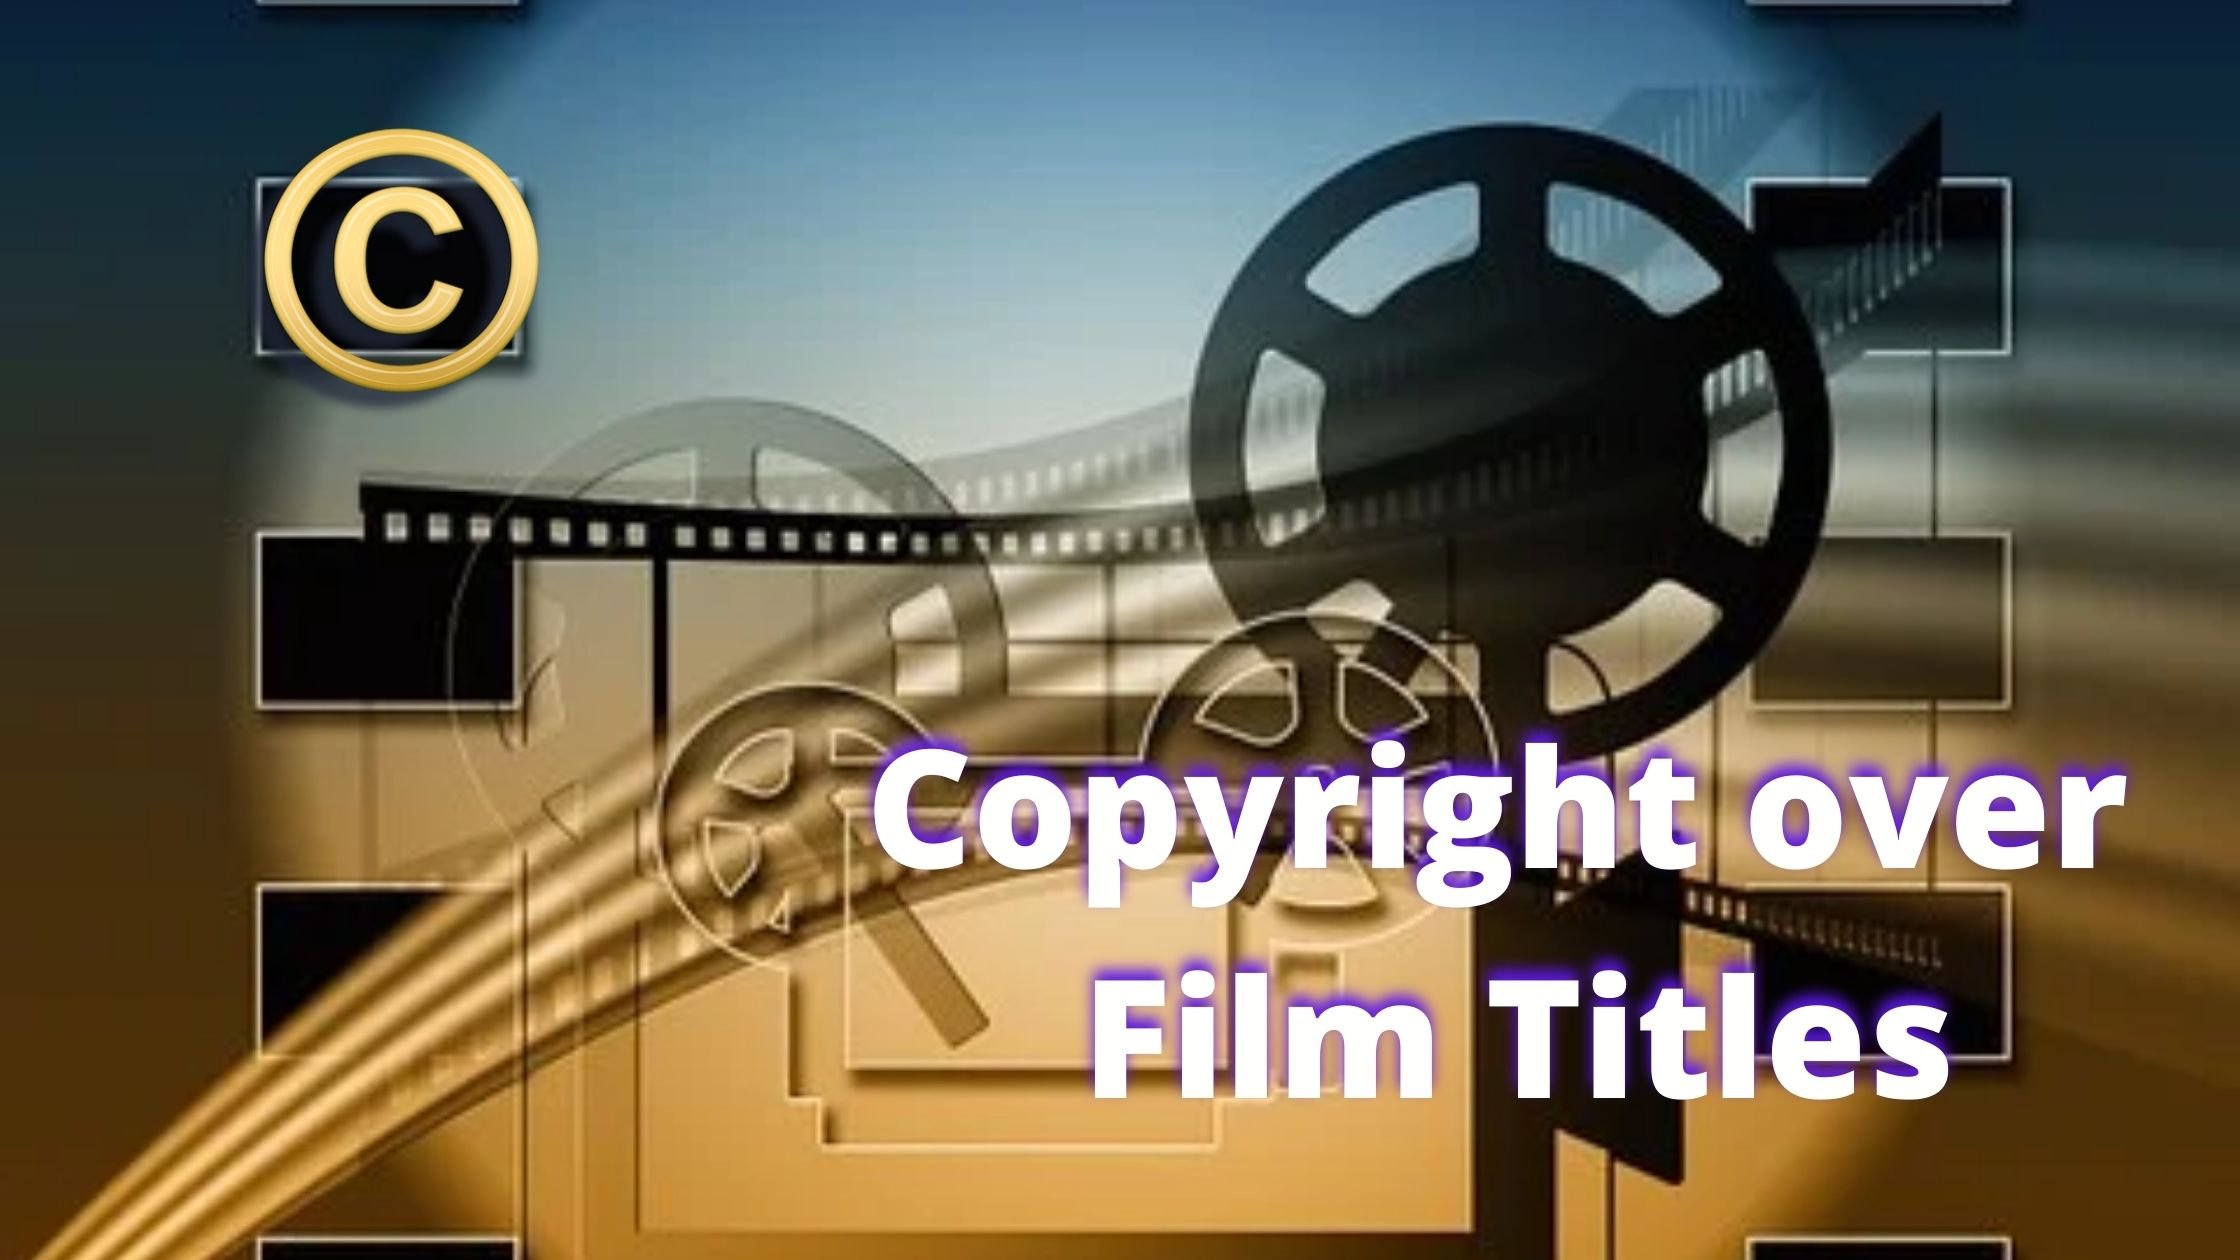 Copyright over Film Titles